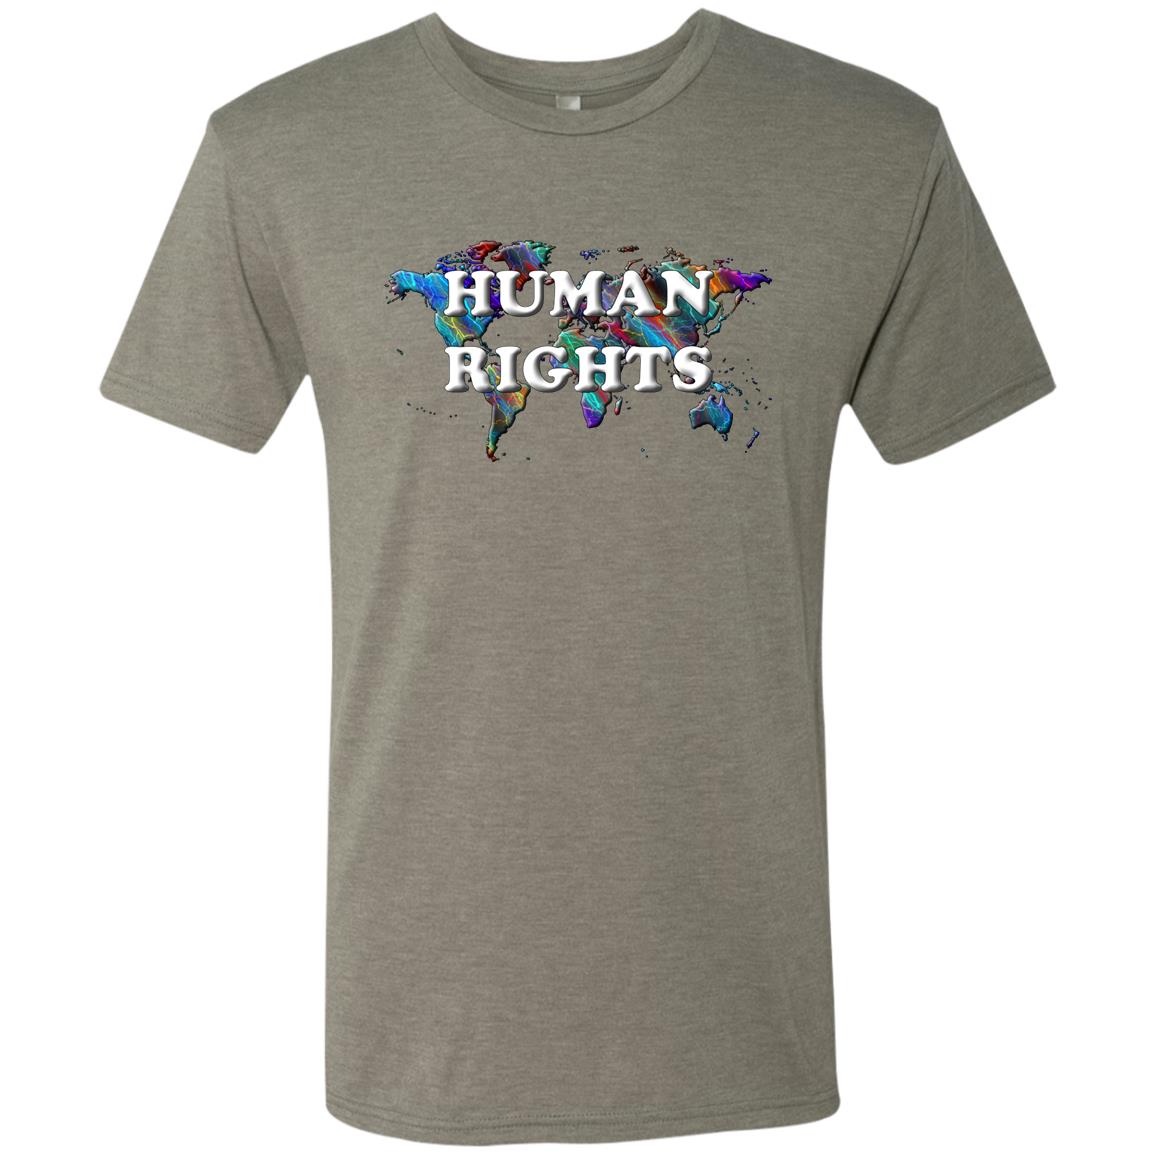 HUMAN RIGHTS STATEMENT T-SHIRT